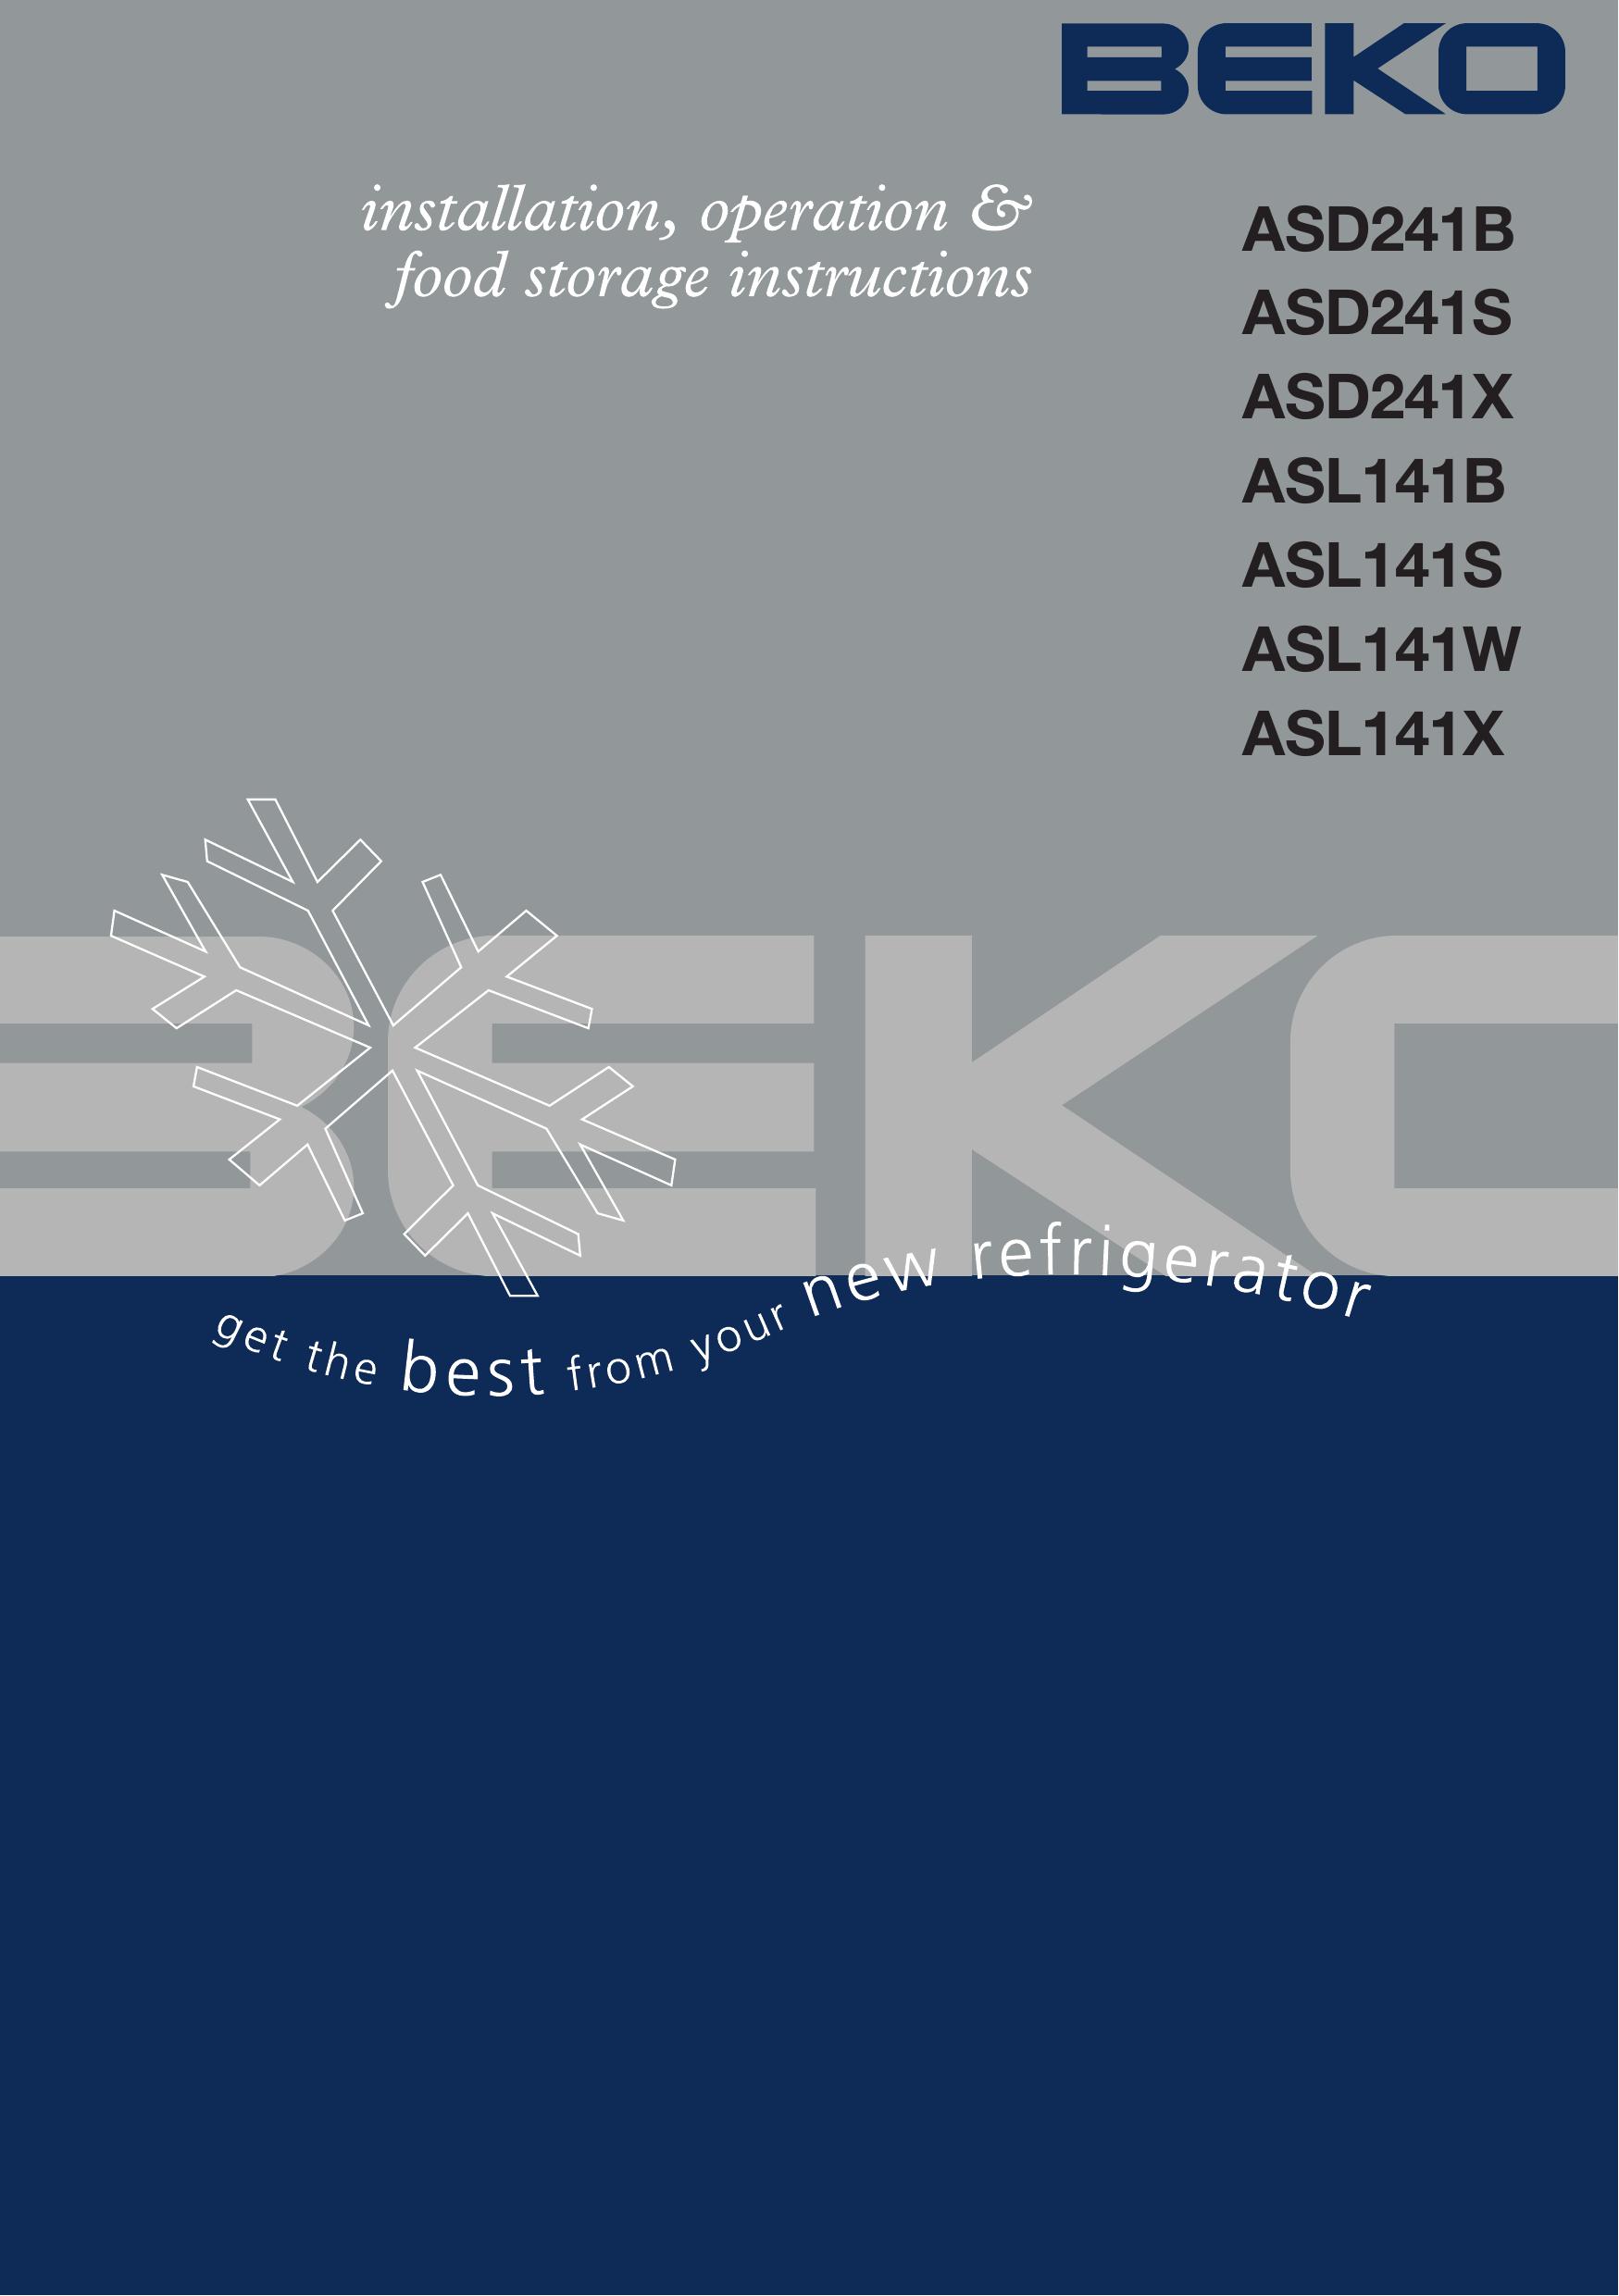 Beko ASL141X Refrigerator User Manual